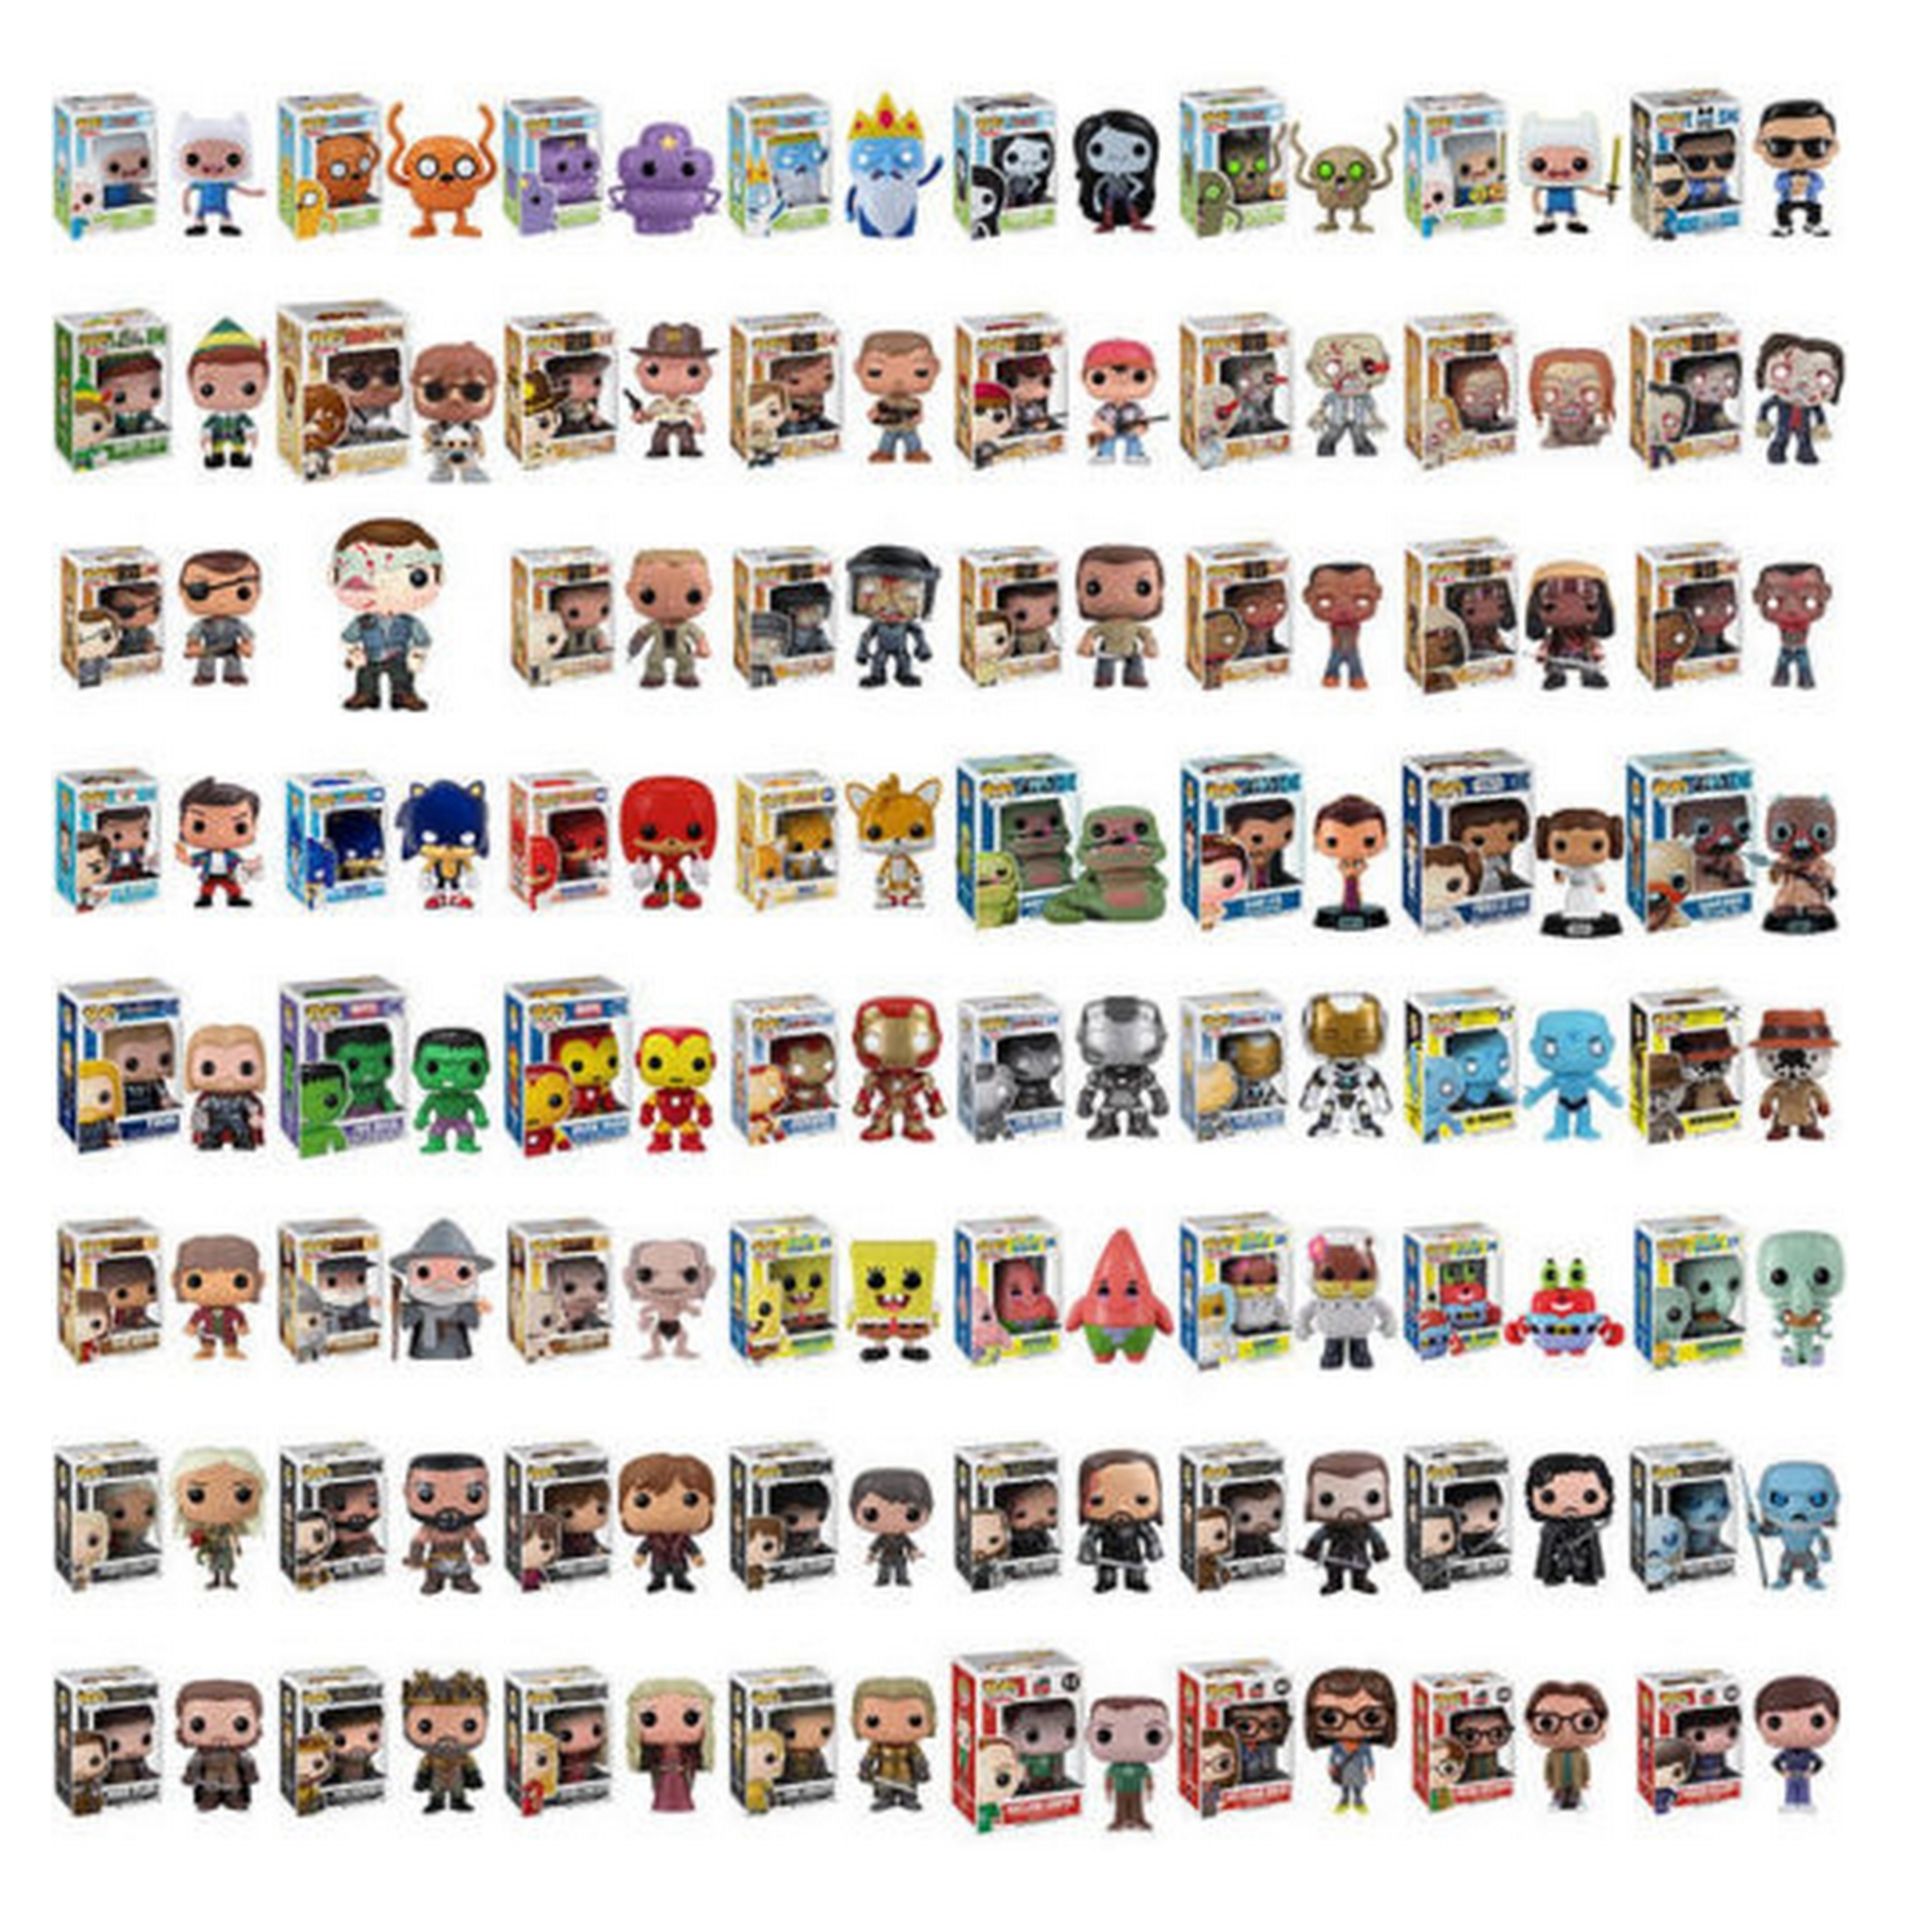 10 X Random Funko Pop Vinyl Figures Music, Tv, Movies, Heroes, Games & Comic Characters - Image 3 of 3